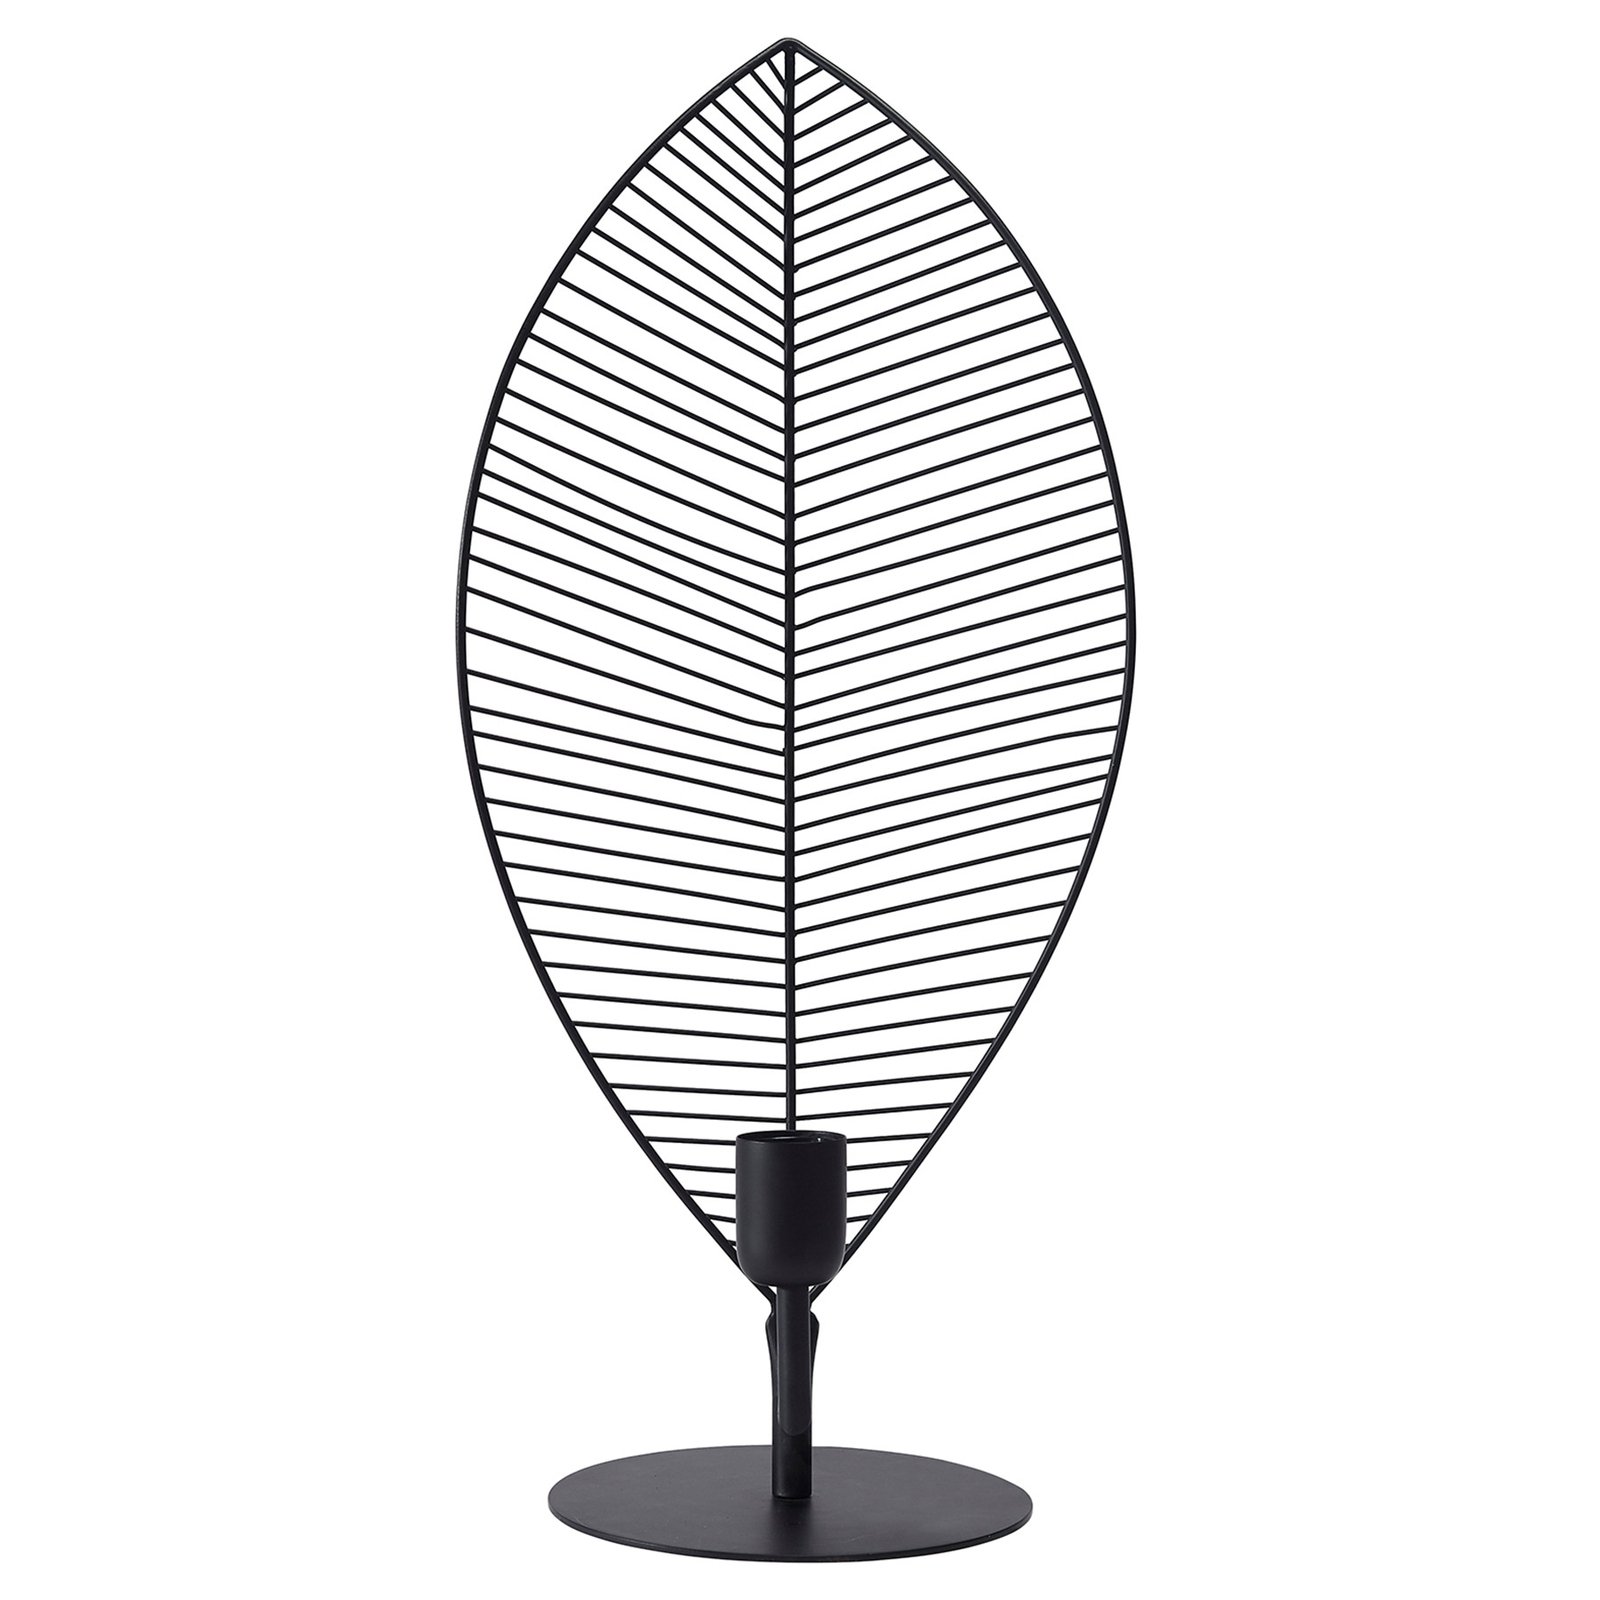 PR Home Elm bordslampa i bladform, höjd 58 cm